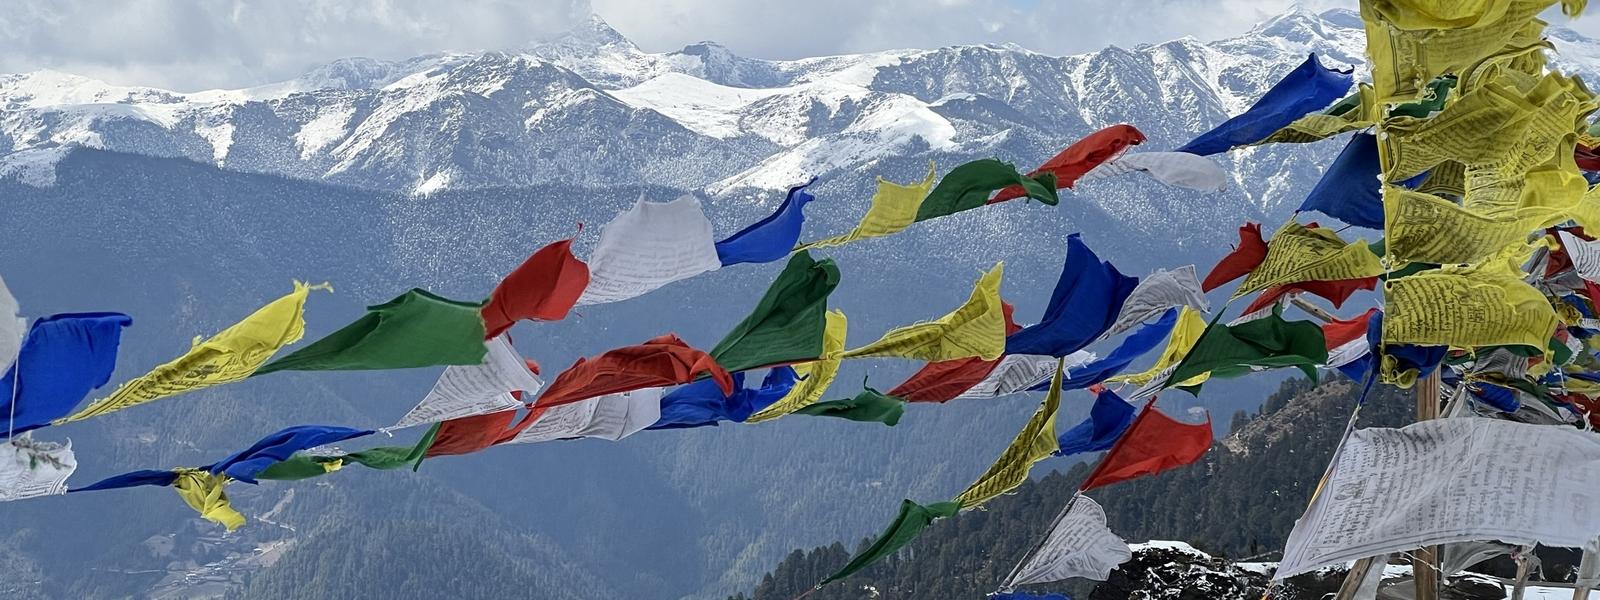 Prayer flags over a mountain in Bhutan